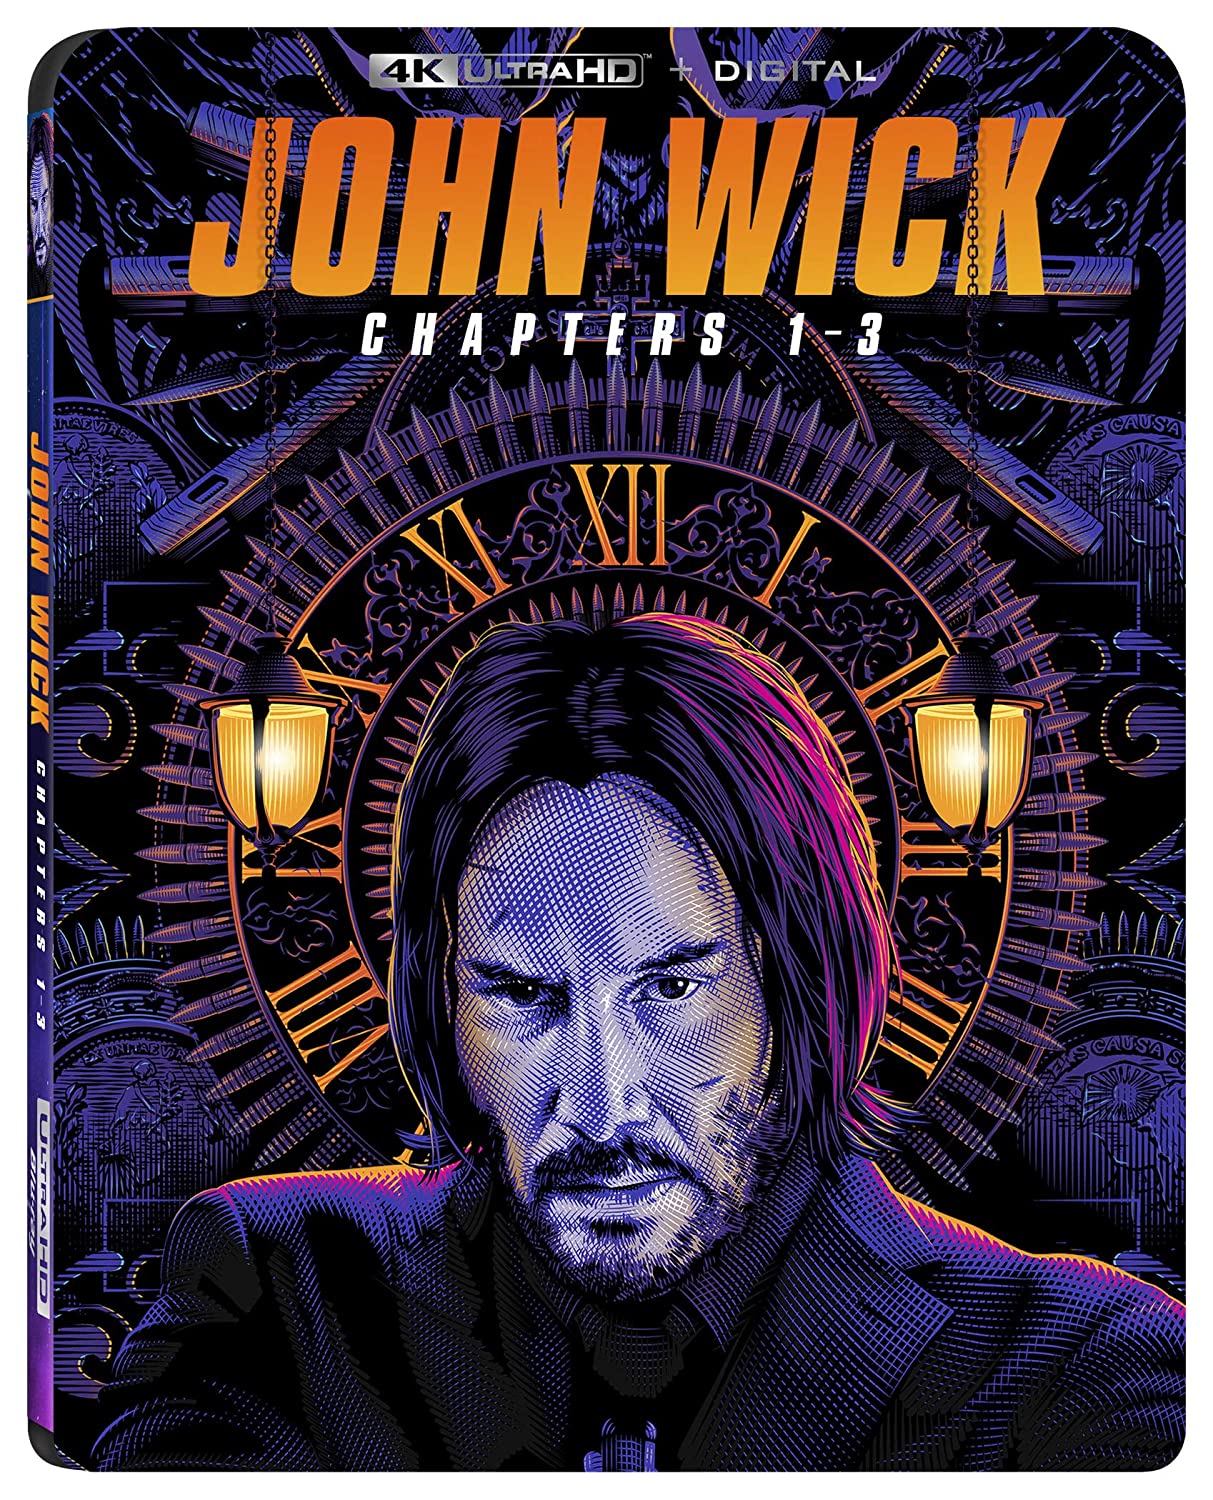 John Wick: Chapters 1-3 [4K + Digital] - $27.49+tax at Amazon